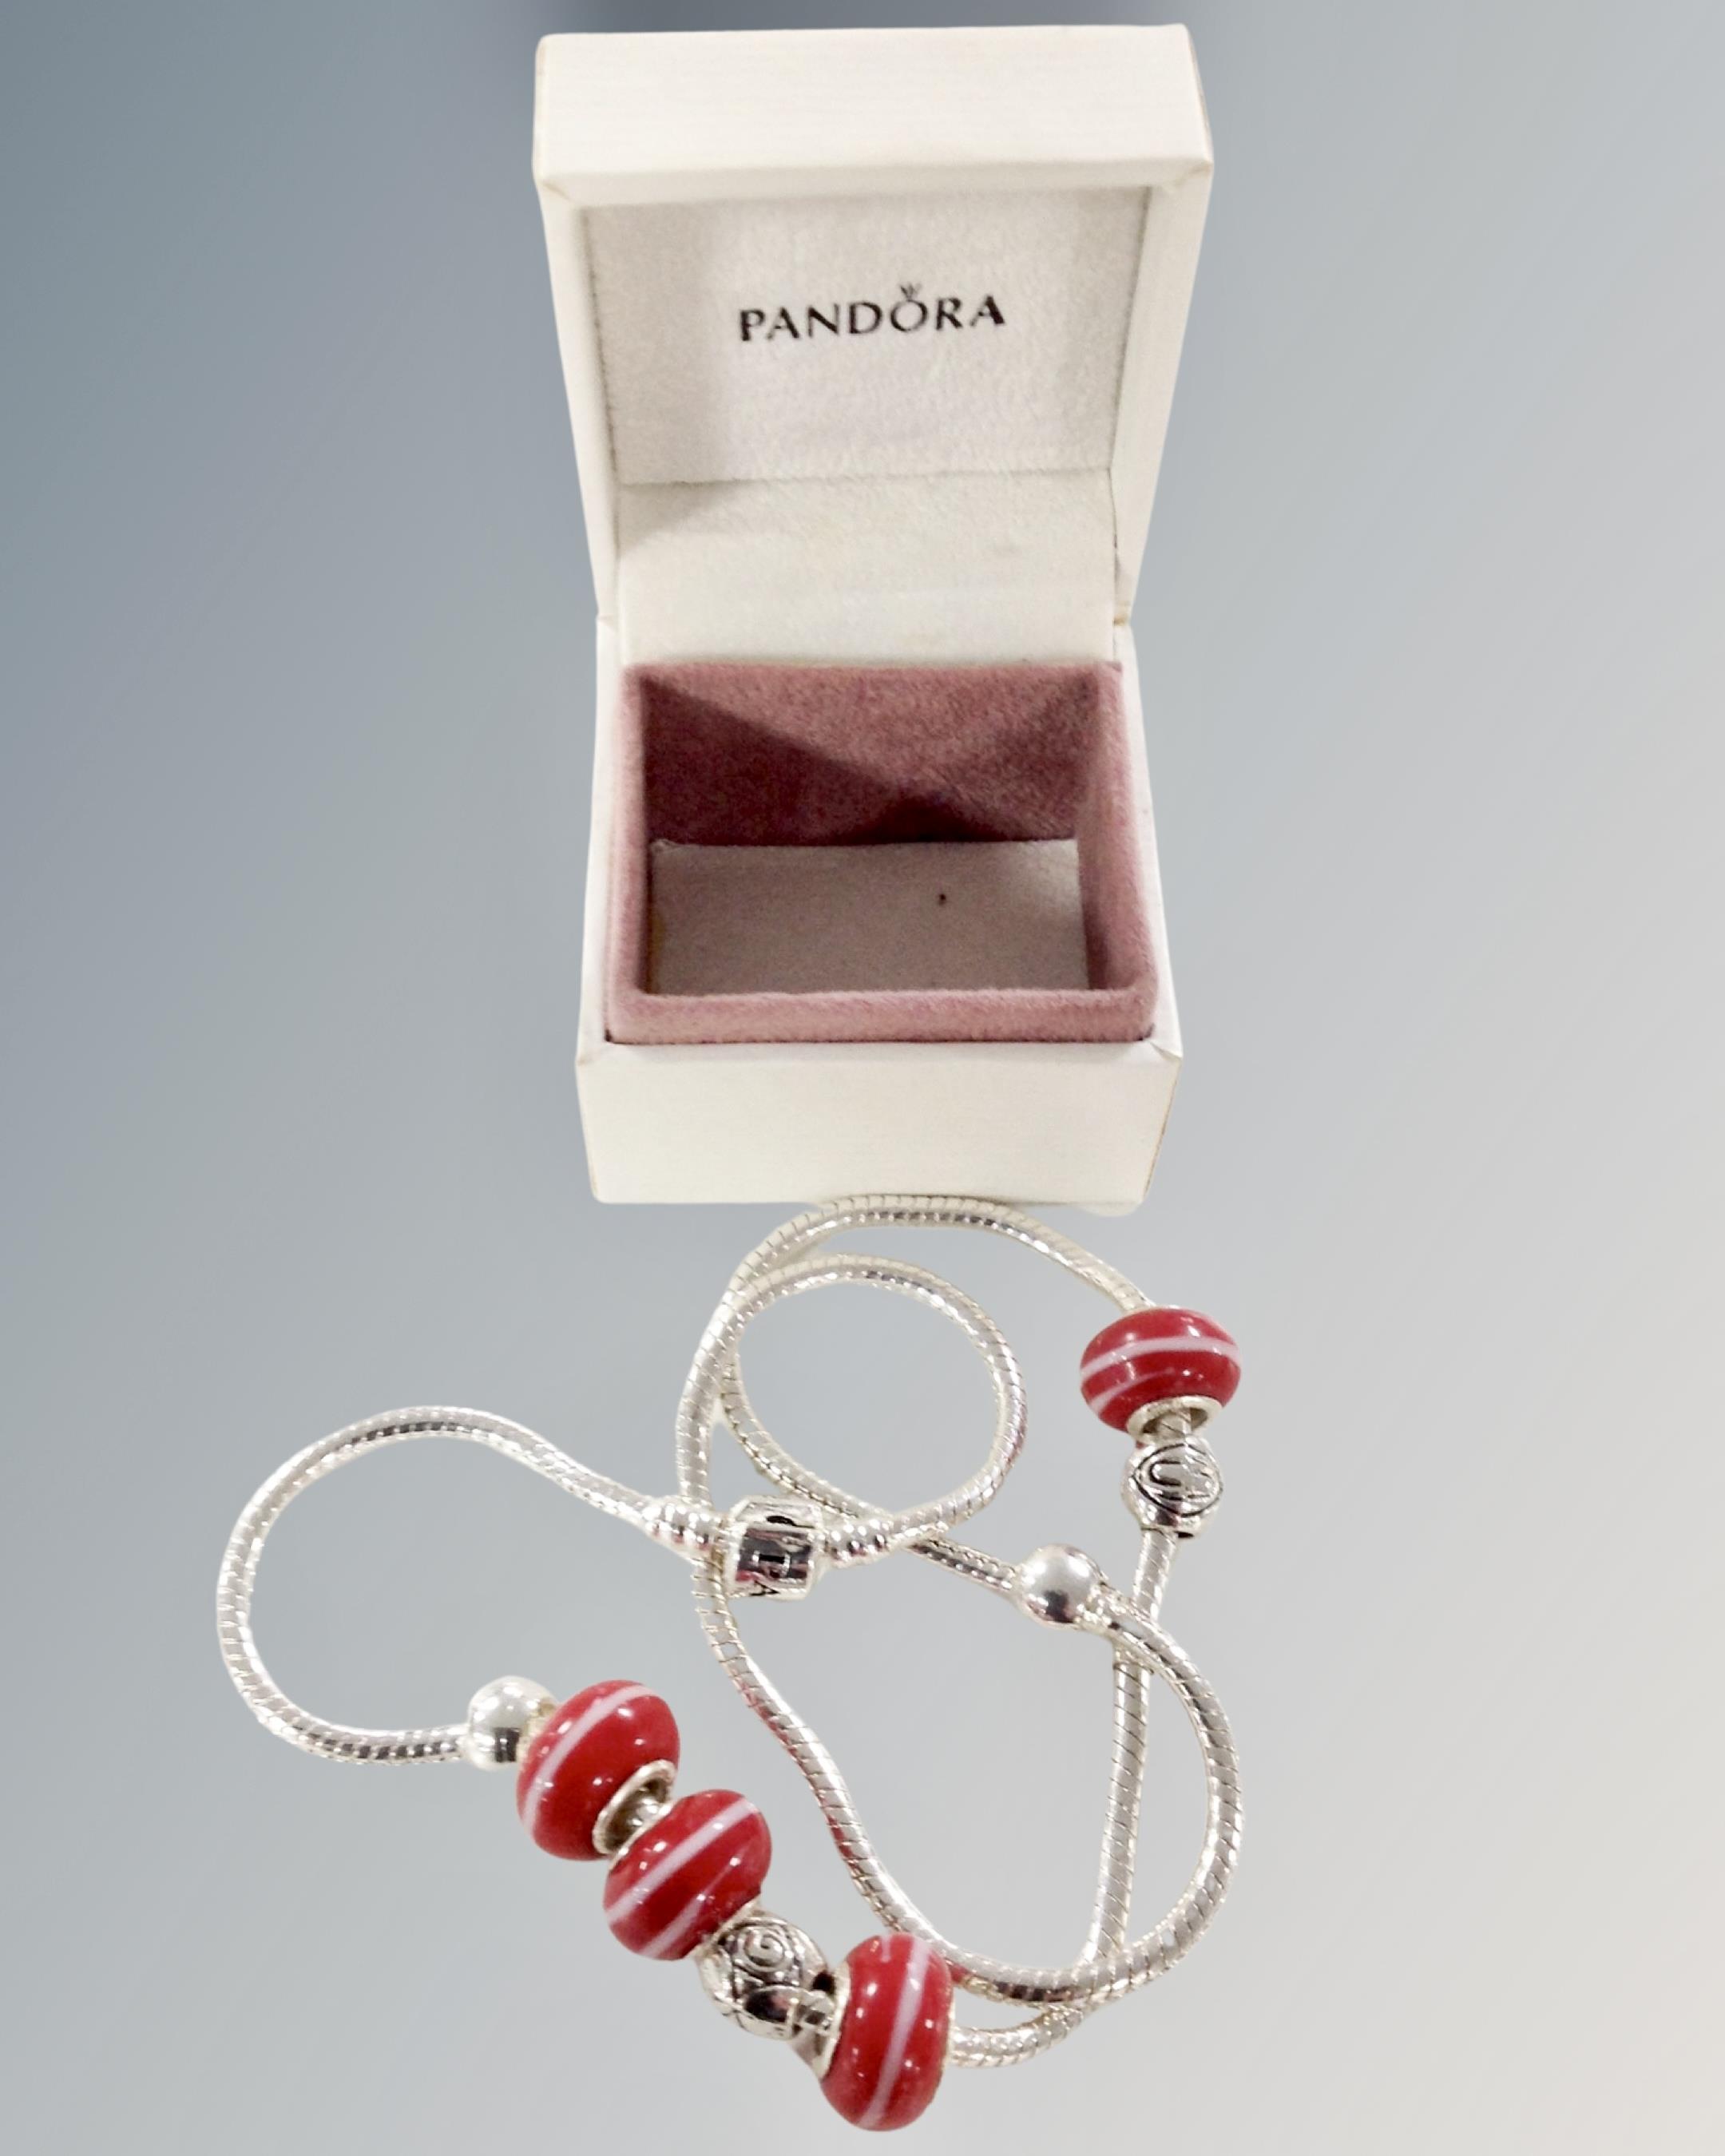 A Pandora silver necklace in box.